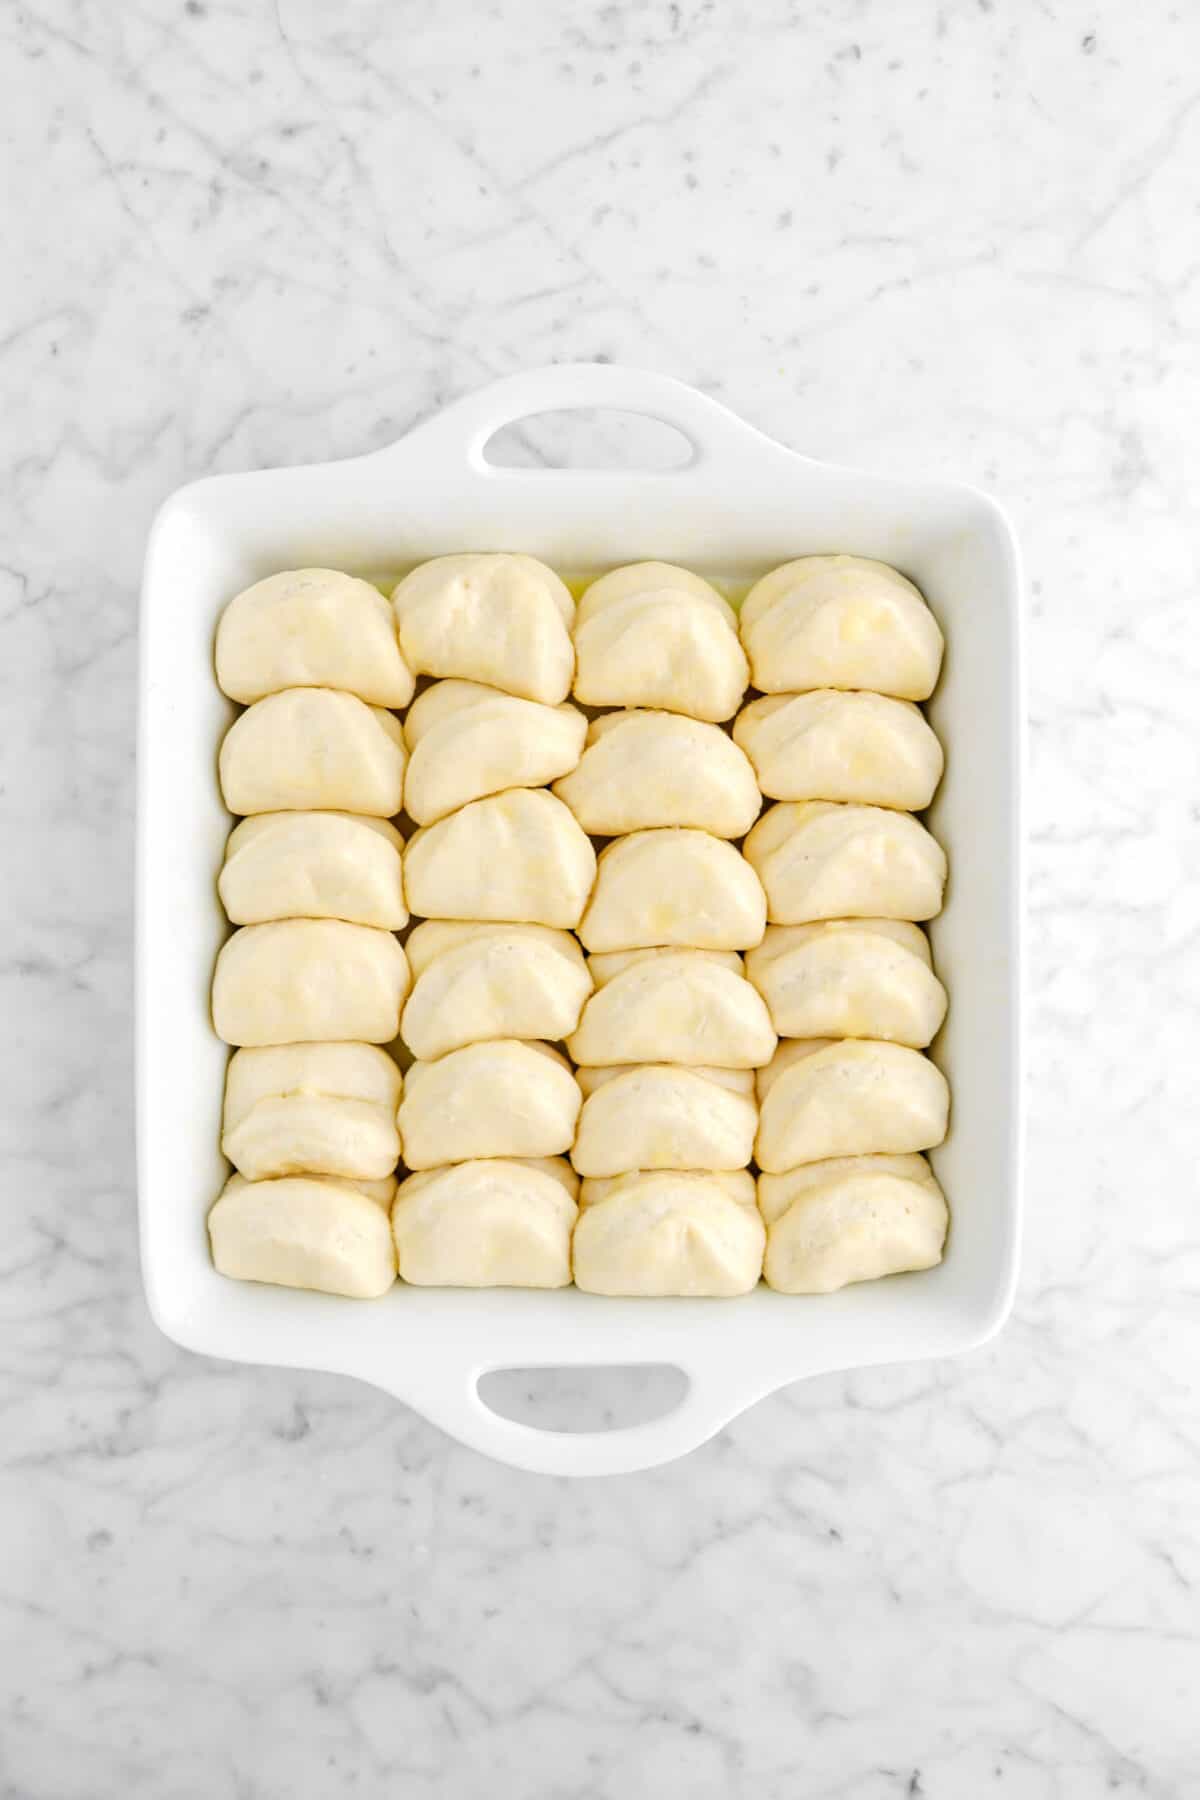 rolls doubled in size in casserole